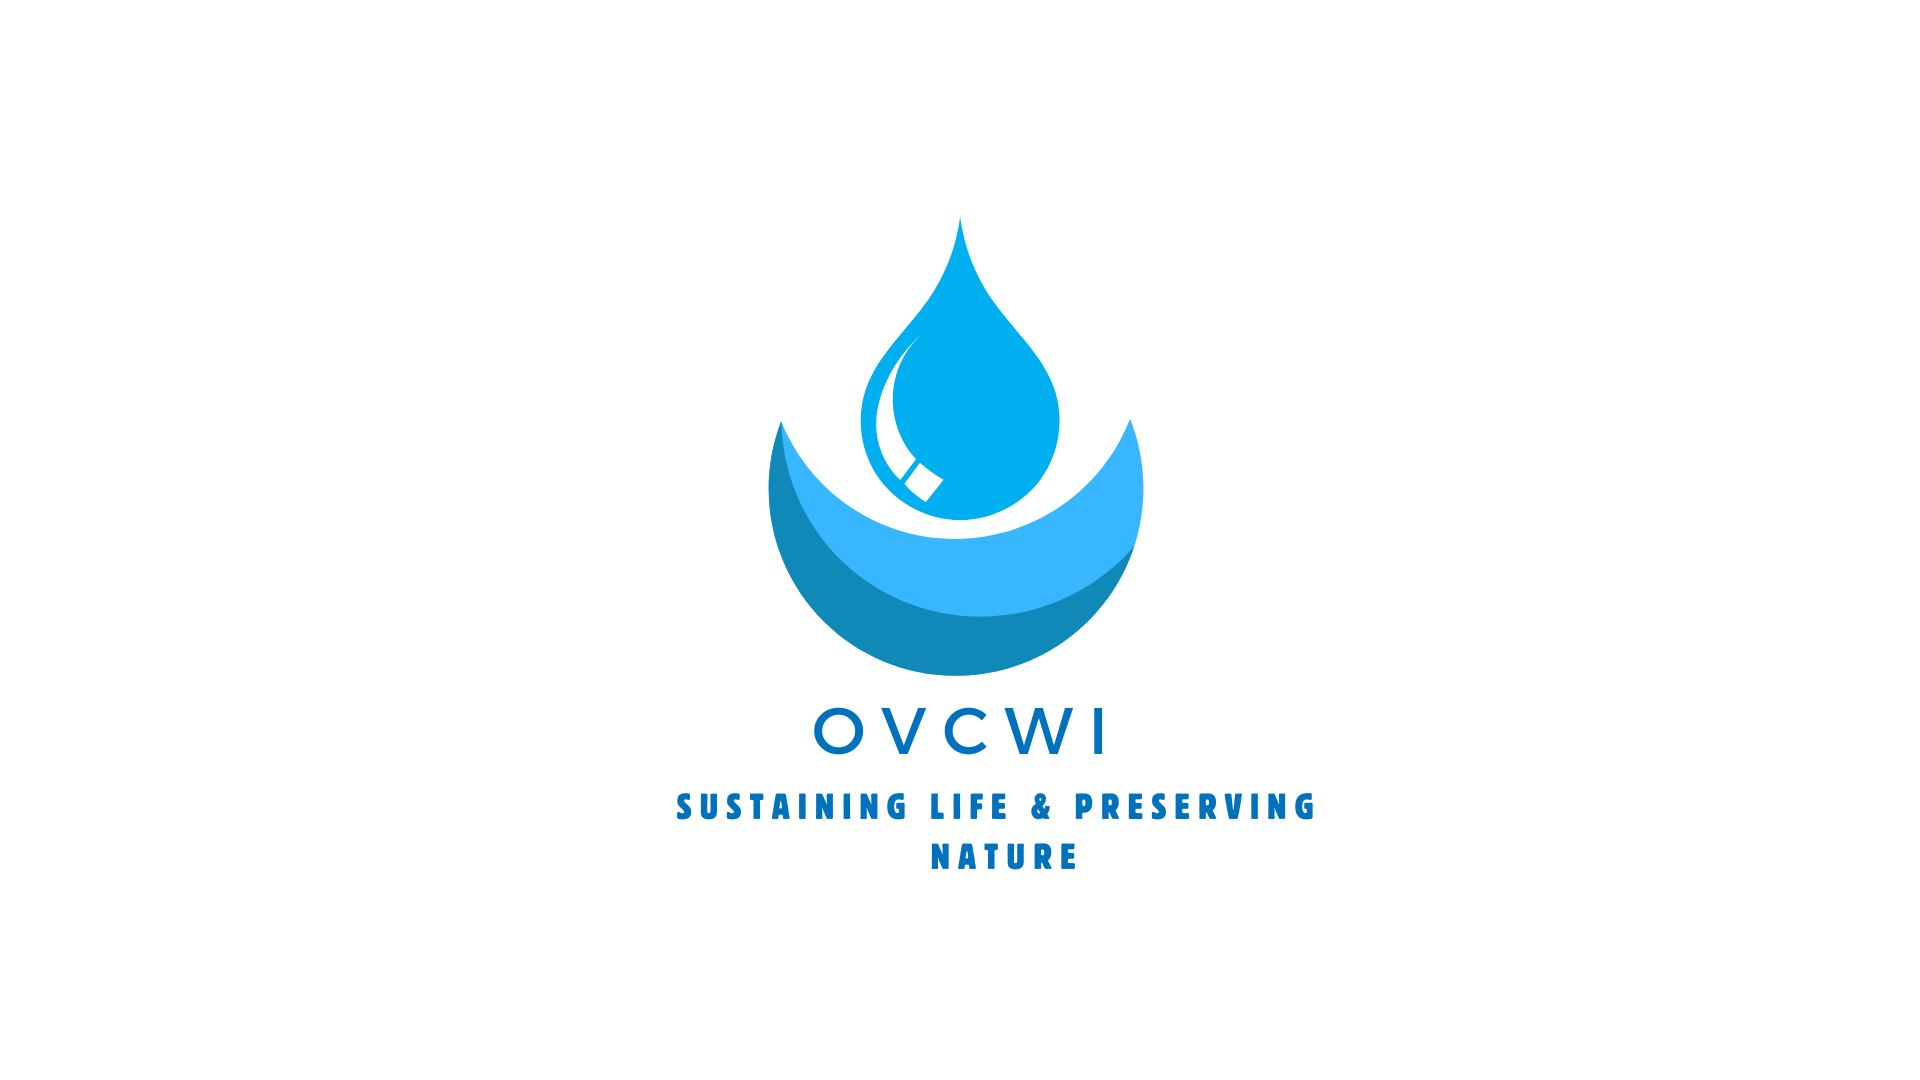 Omo Valley Clean Potable Water Initiatives